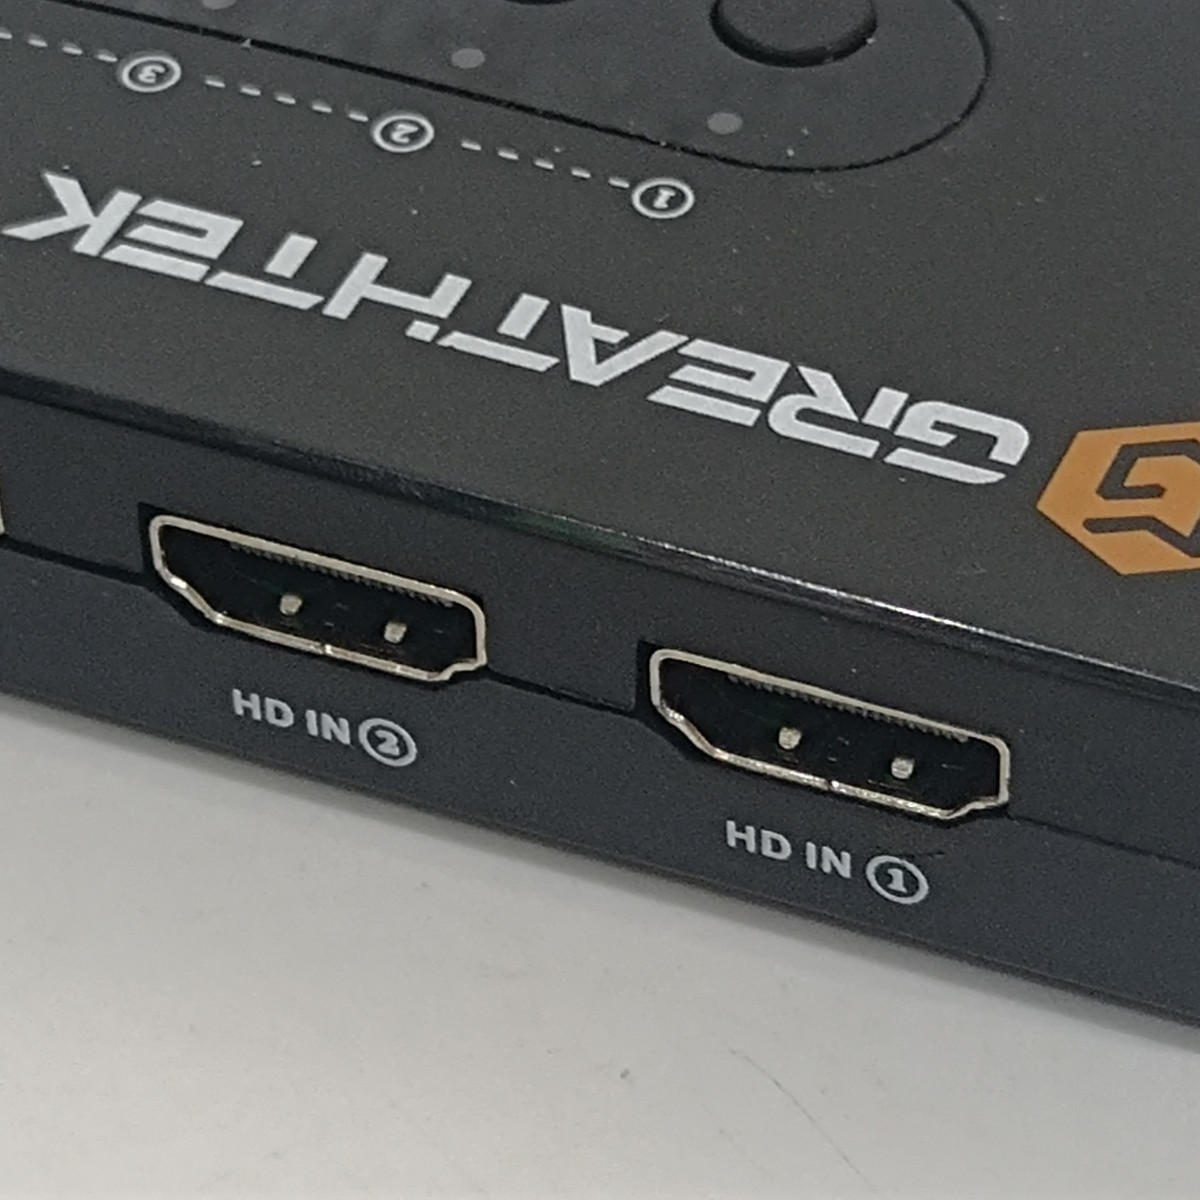 KVM HDMI 4 port KVM switch HDMI 4 port 4K@30Hz 3.USB2.0 HDMI switch vessel EDID control KVM 4 input 1 output at hand switch attaching y1101-1